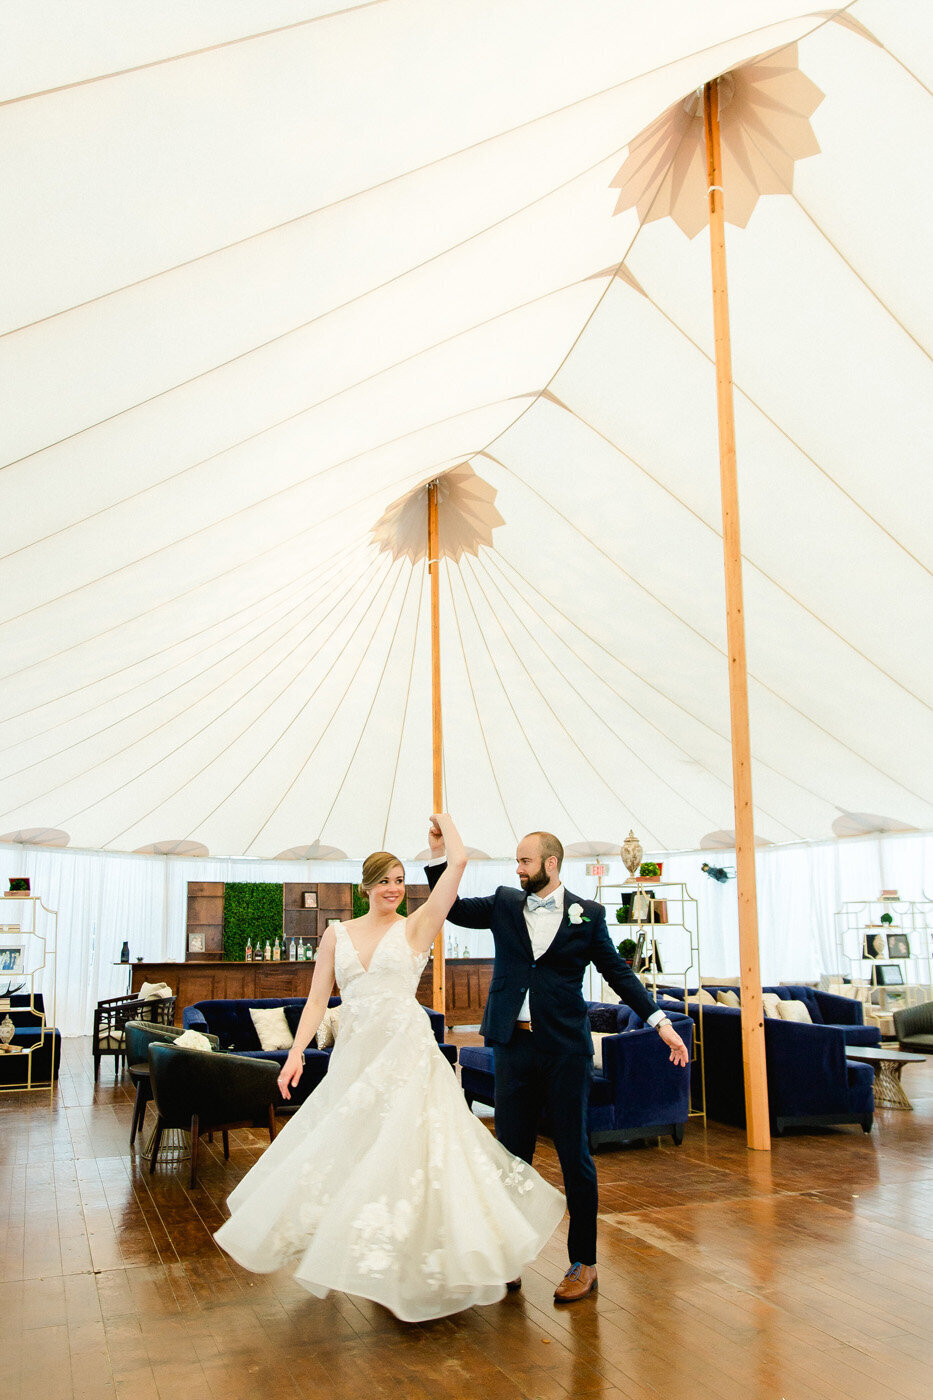 Tampa Yacht Club Wedding @ Ailyn La Torre Photography 2019 - 45062-Edit